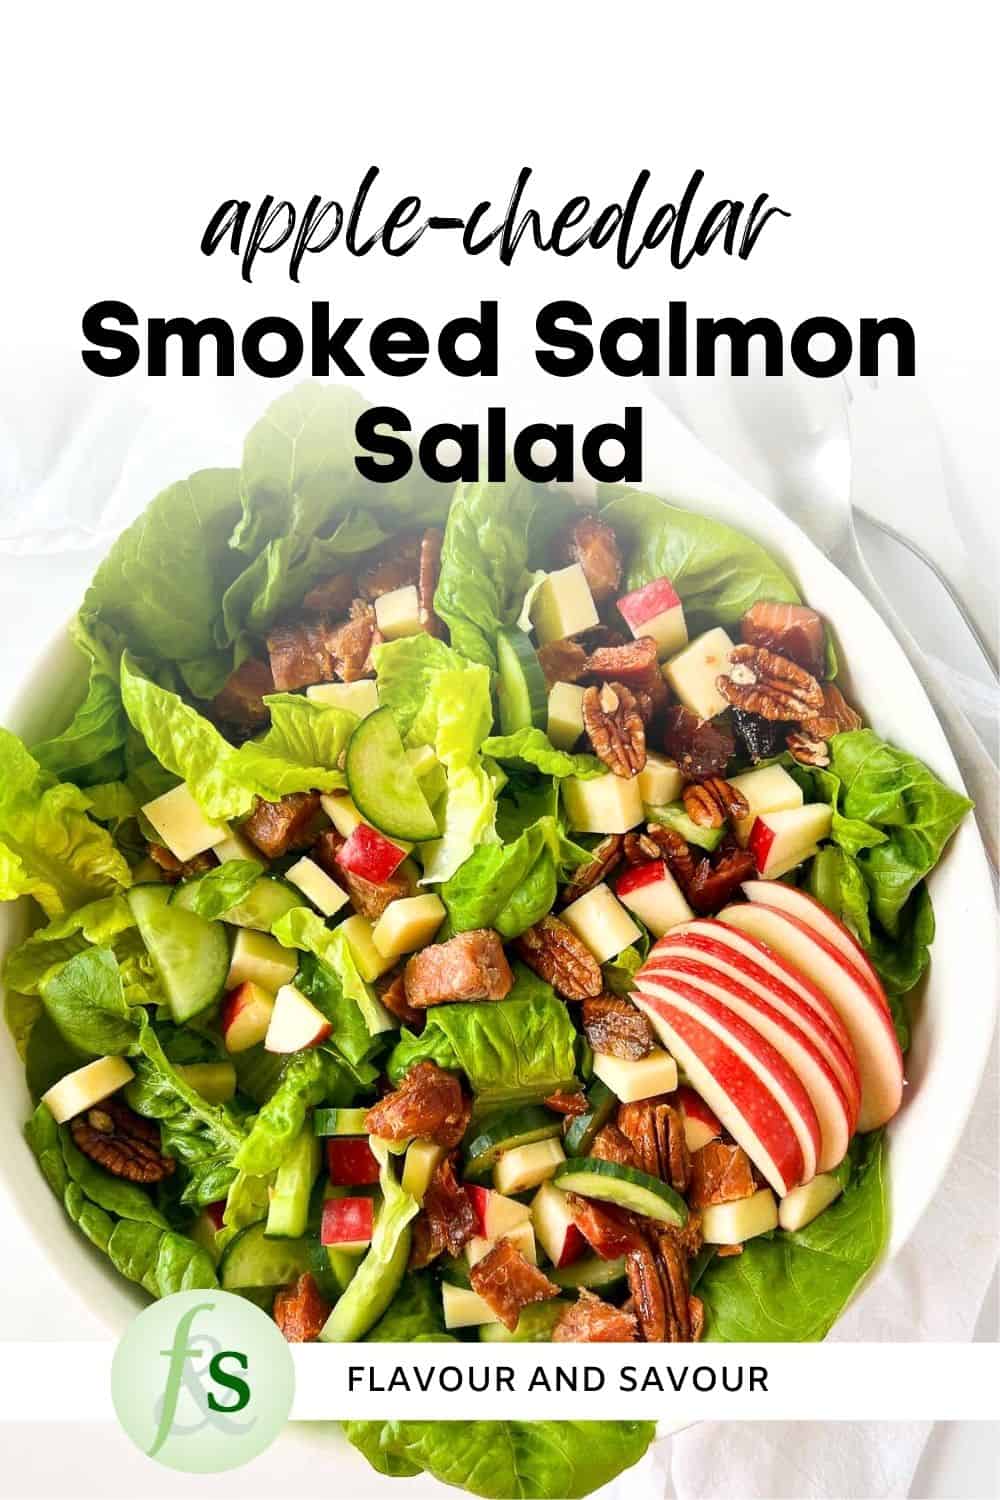 Image with text for apple cheddar smoked salmon salad.